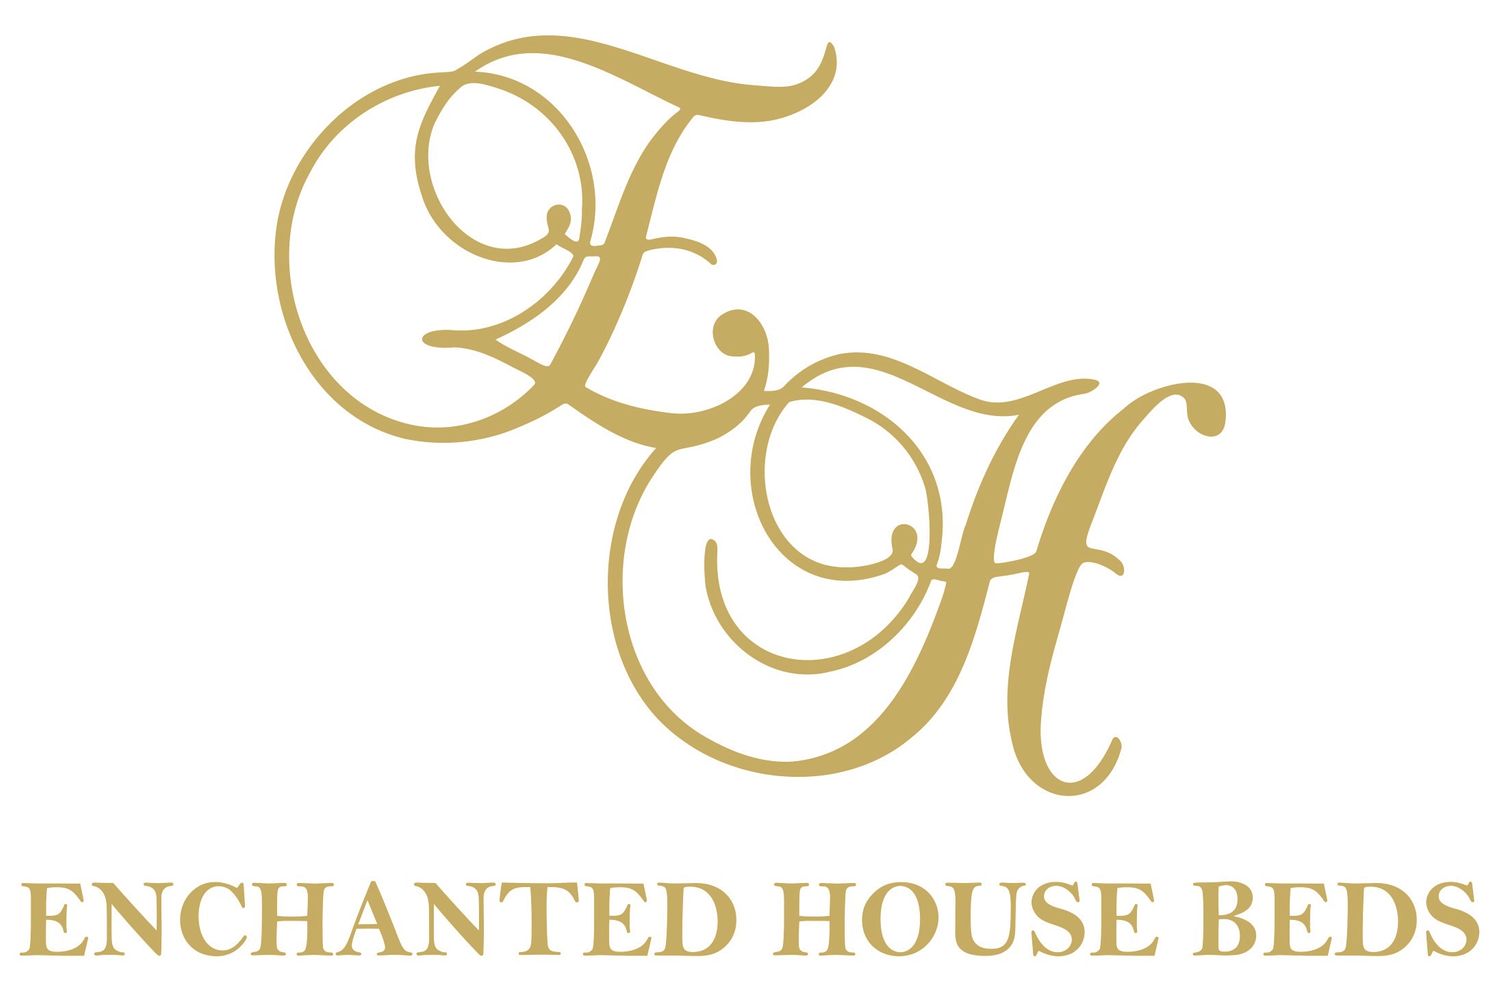 Enchanted House Beds Ltd